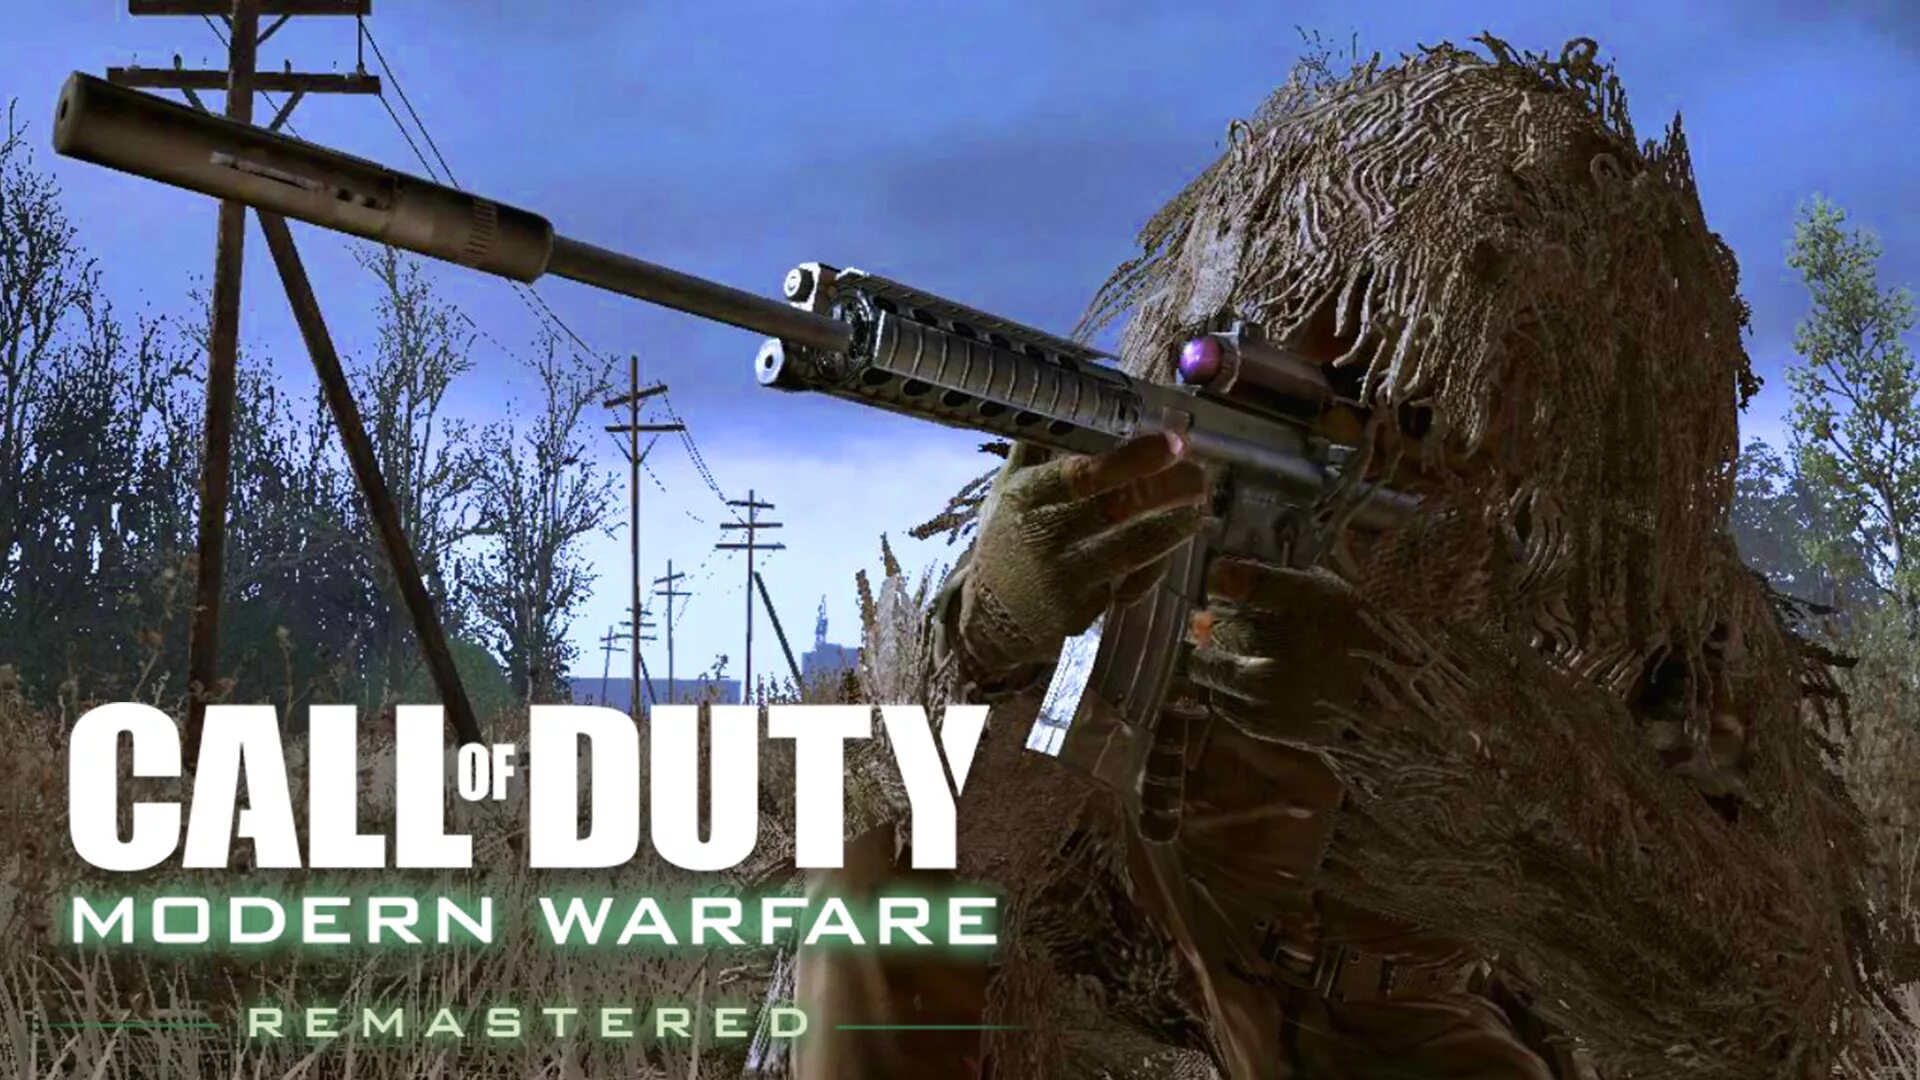 Call of Duty Modern Warfare Remastered. Call of Duty 4 Modern Warfare Remastered. Call of Duty Modern Warfare Remastered Чернобыль. Кал оф дьюти Модерн варфаер 4 Чернобыль. Колл дьюти 4